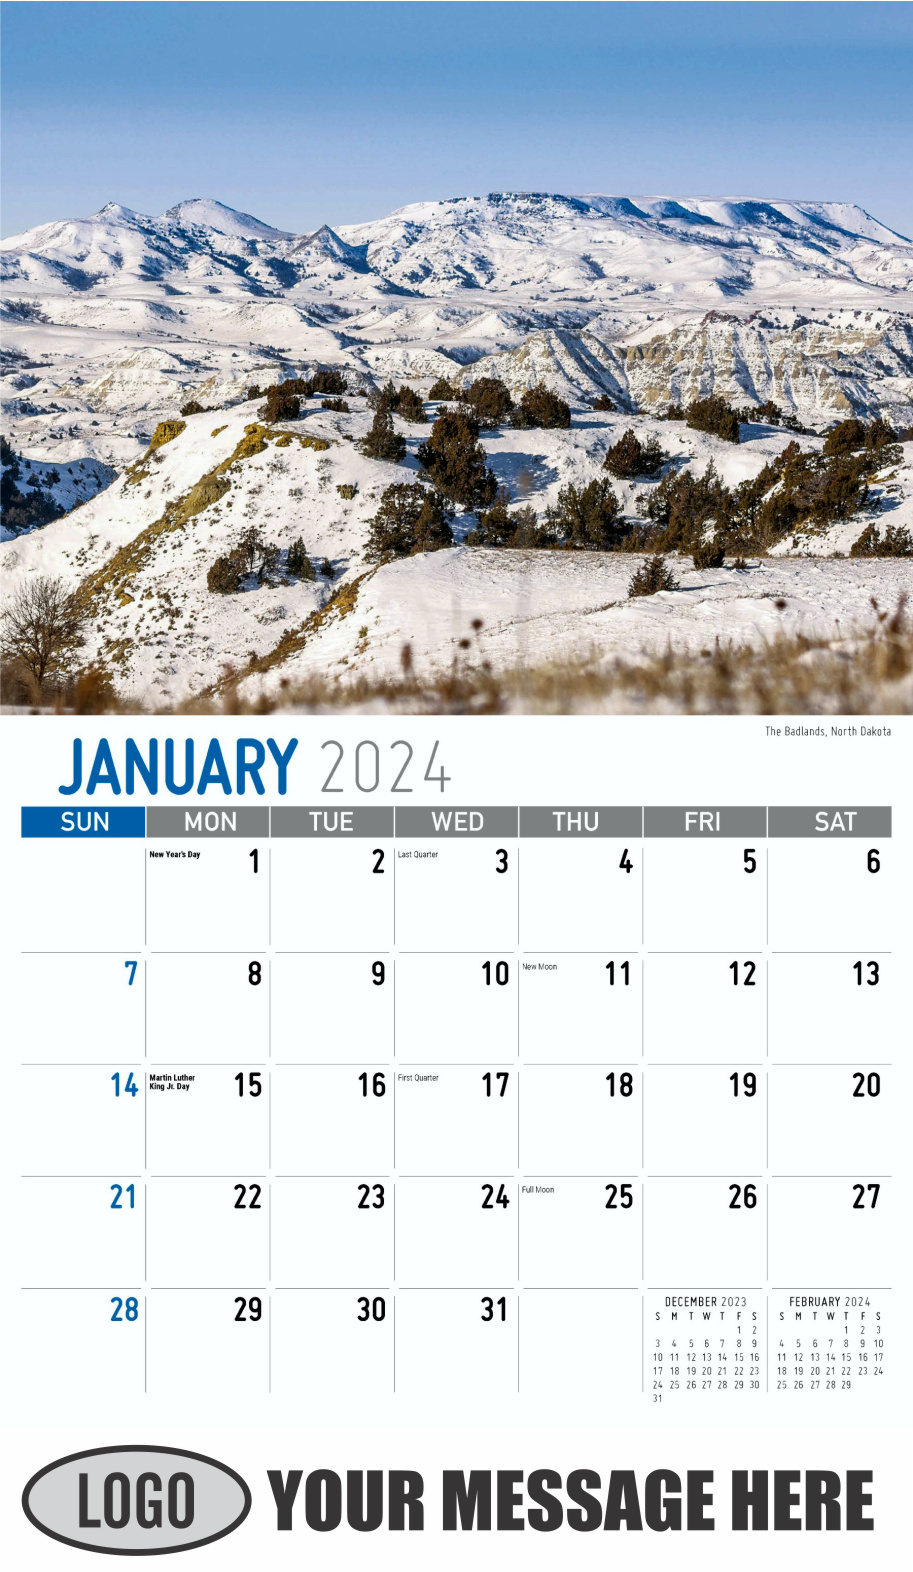 Scenes of America 2024 Business Advertising Wall Calendar - January